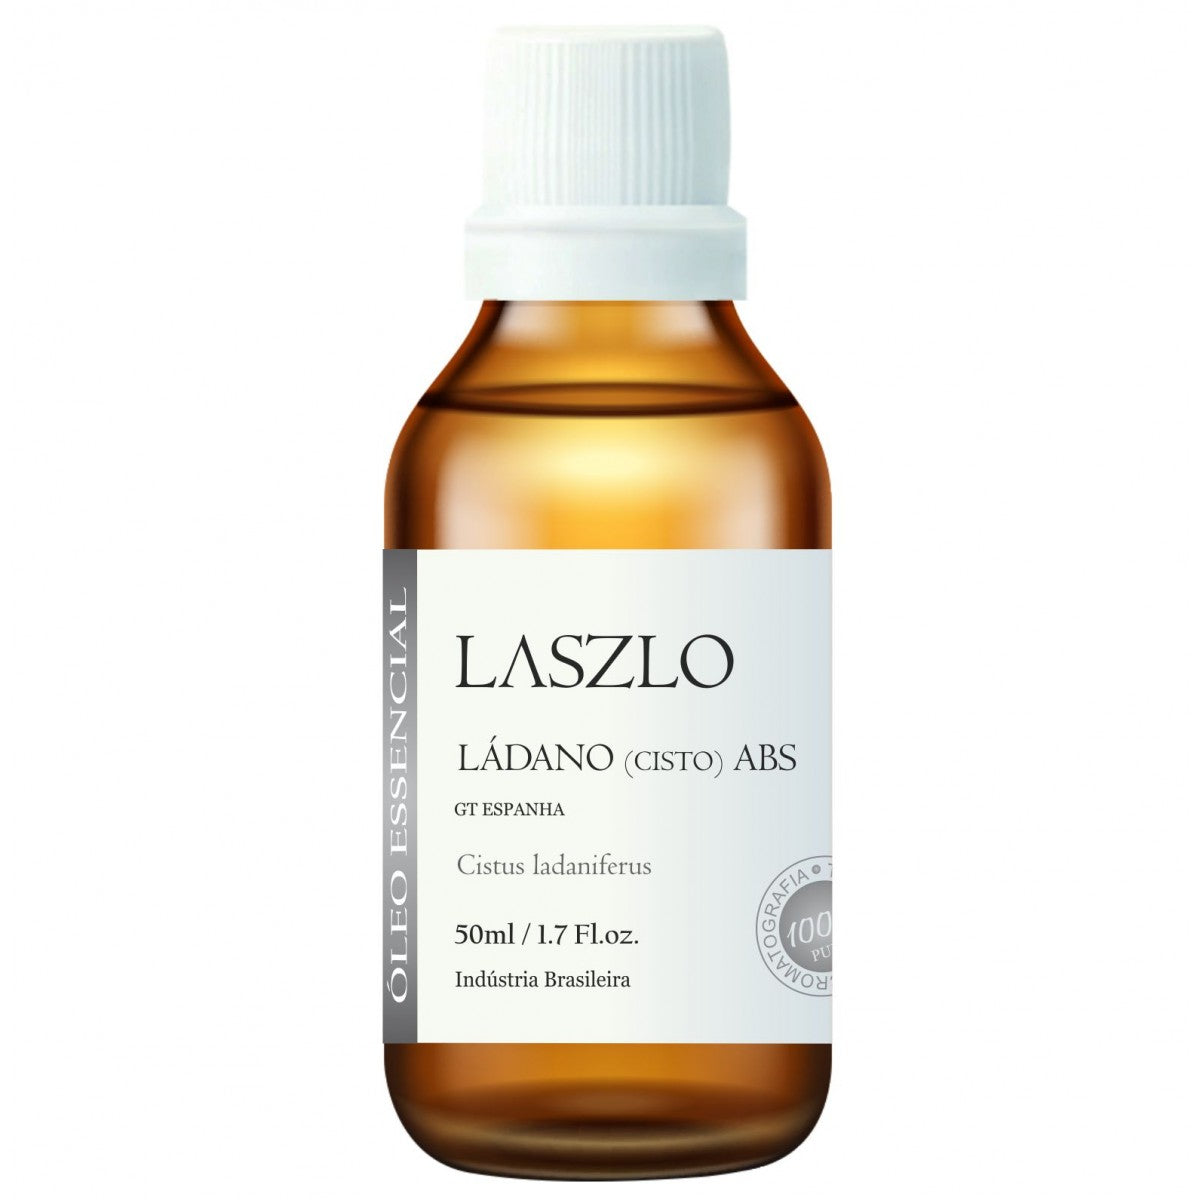 Absoluto de Ládano (Cisto) Resinoide - Laszlo - Frasco com 50ml - Mundo dos Óleos